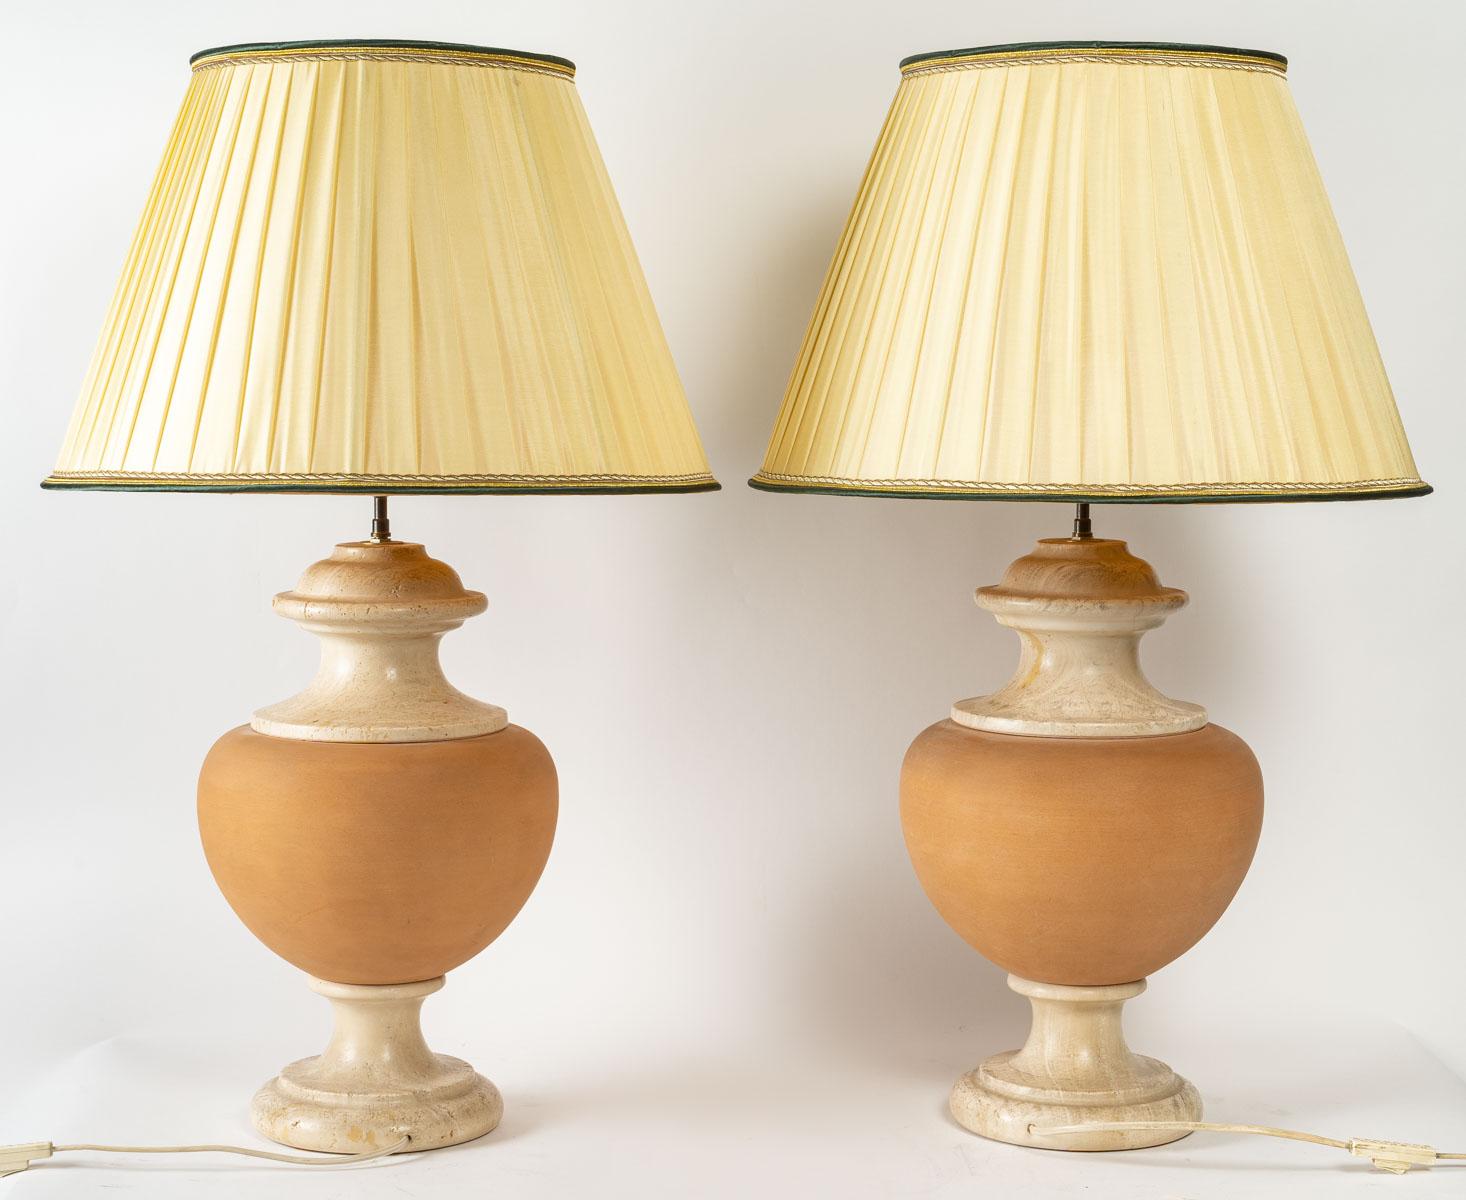  Pair of Lamps in Travertine and Ceramic, 20th Century 1